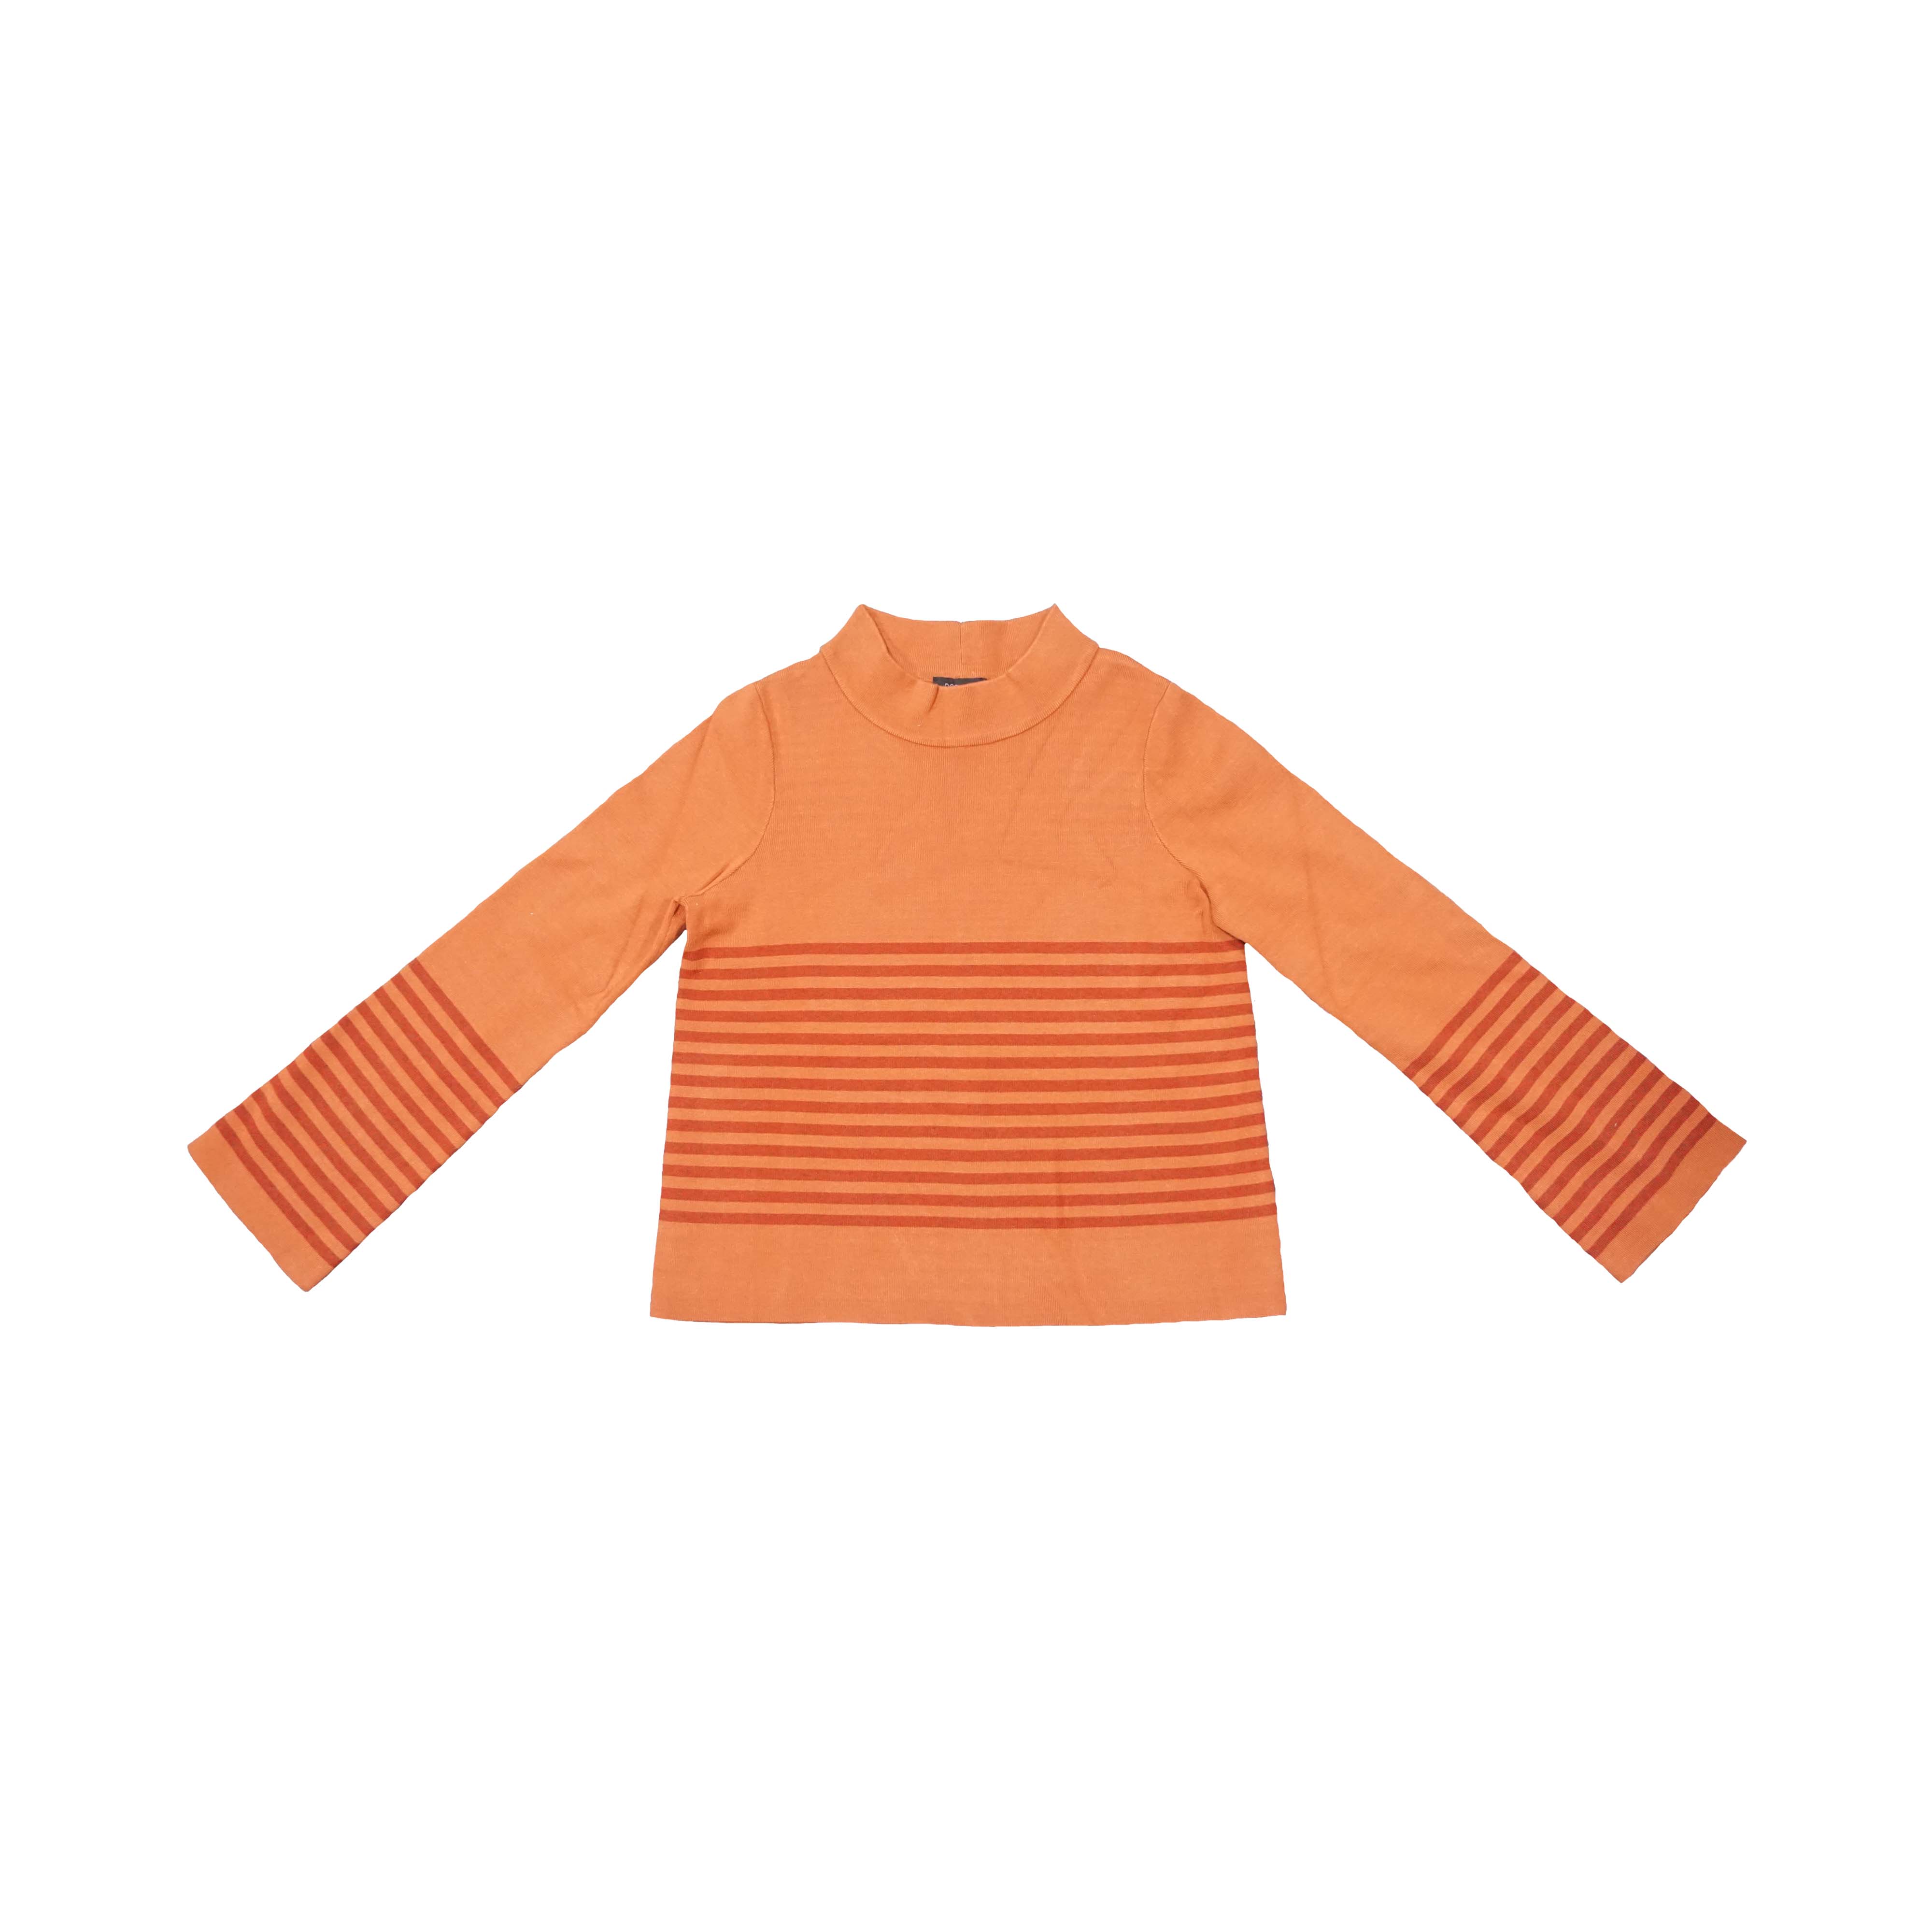 Fashionable customized turtleneck nga babaye nga sweater